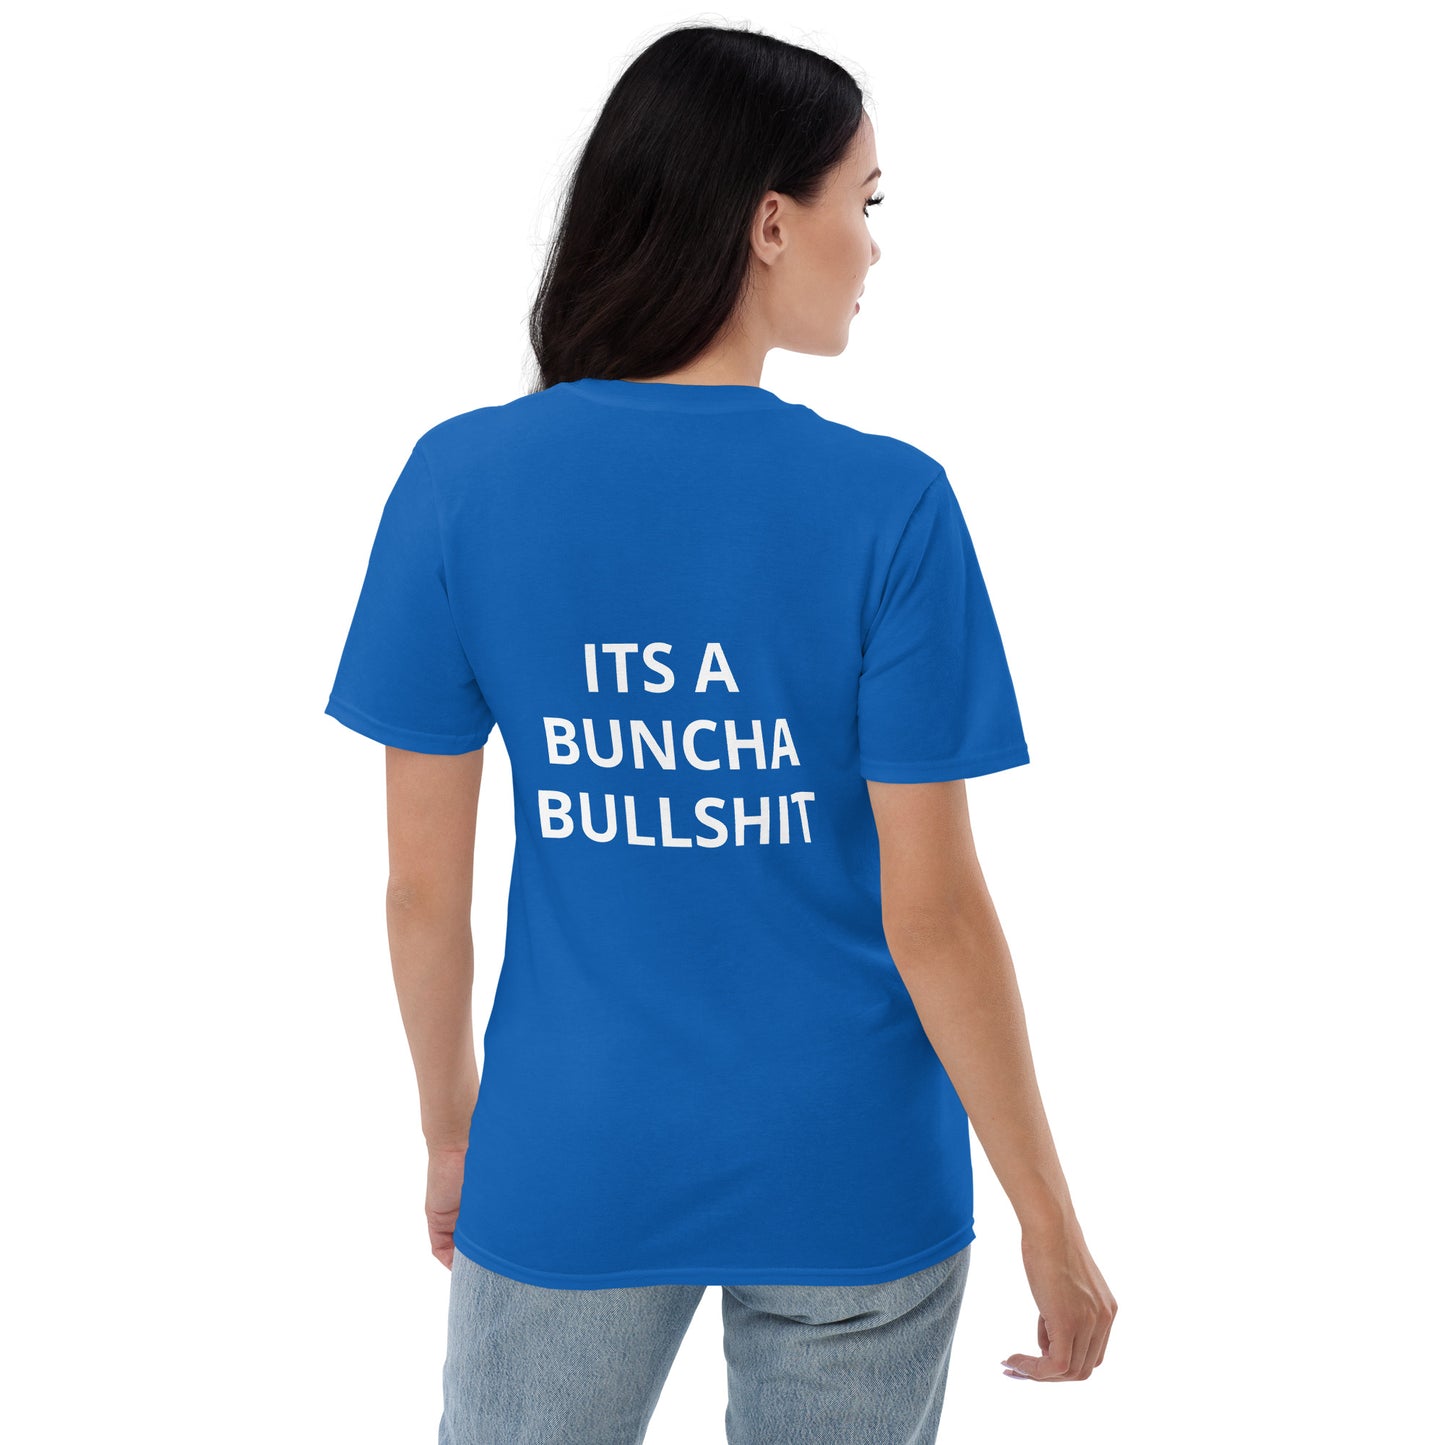 Short-Sleeve ITS A BUNCHA BULLSHIT T-Shirt